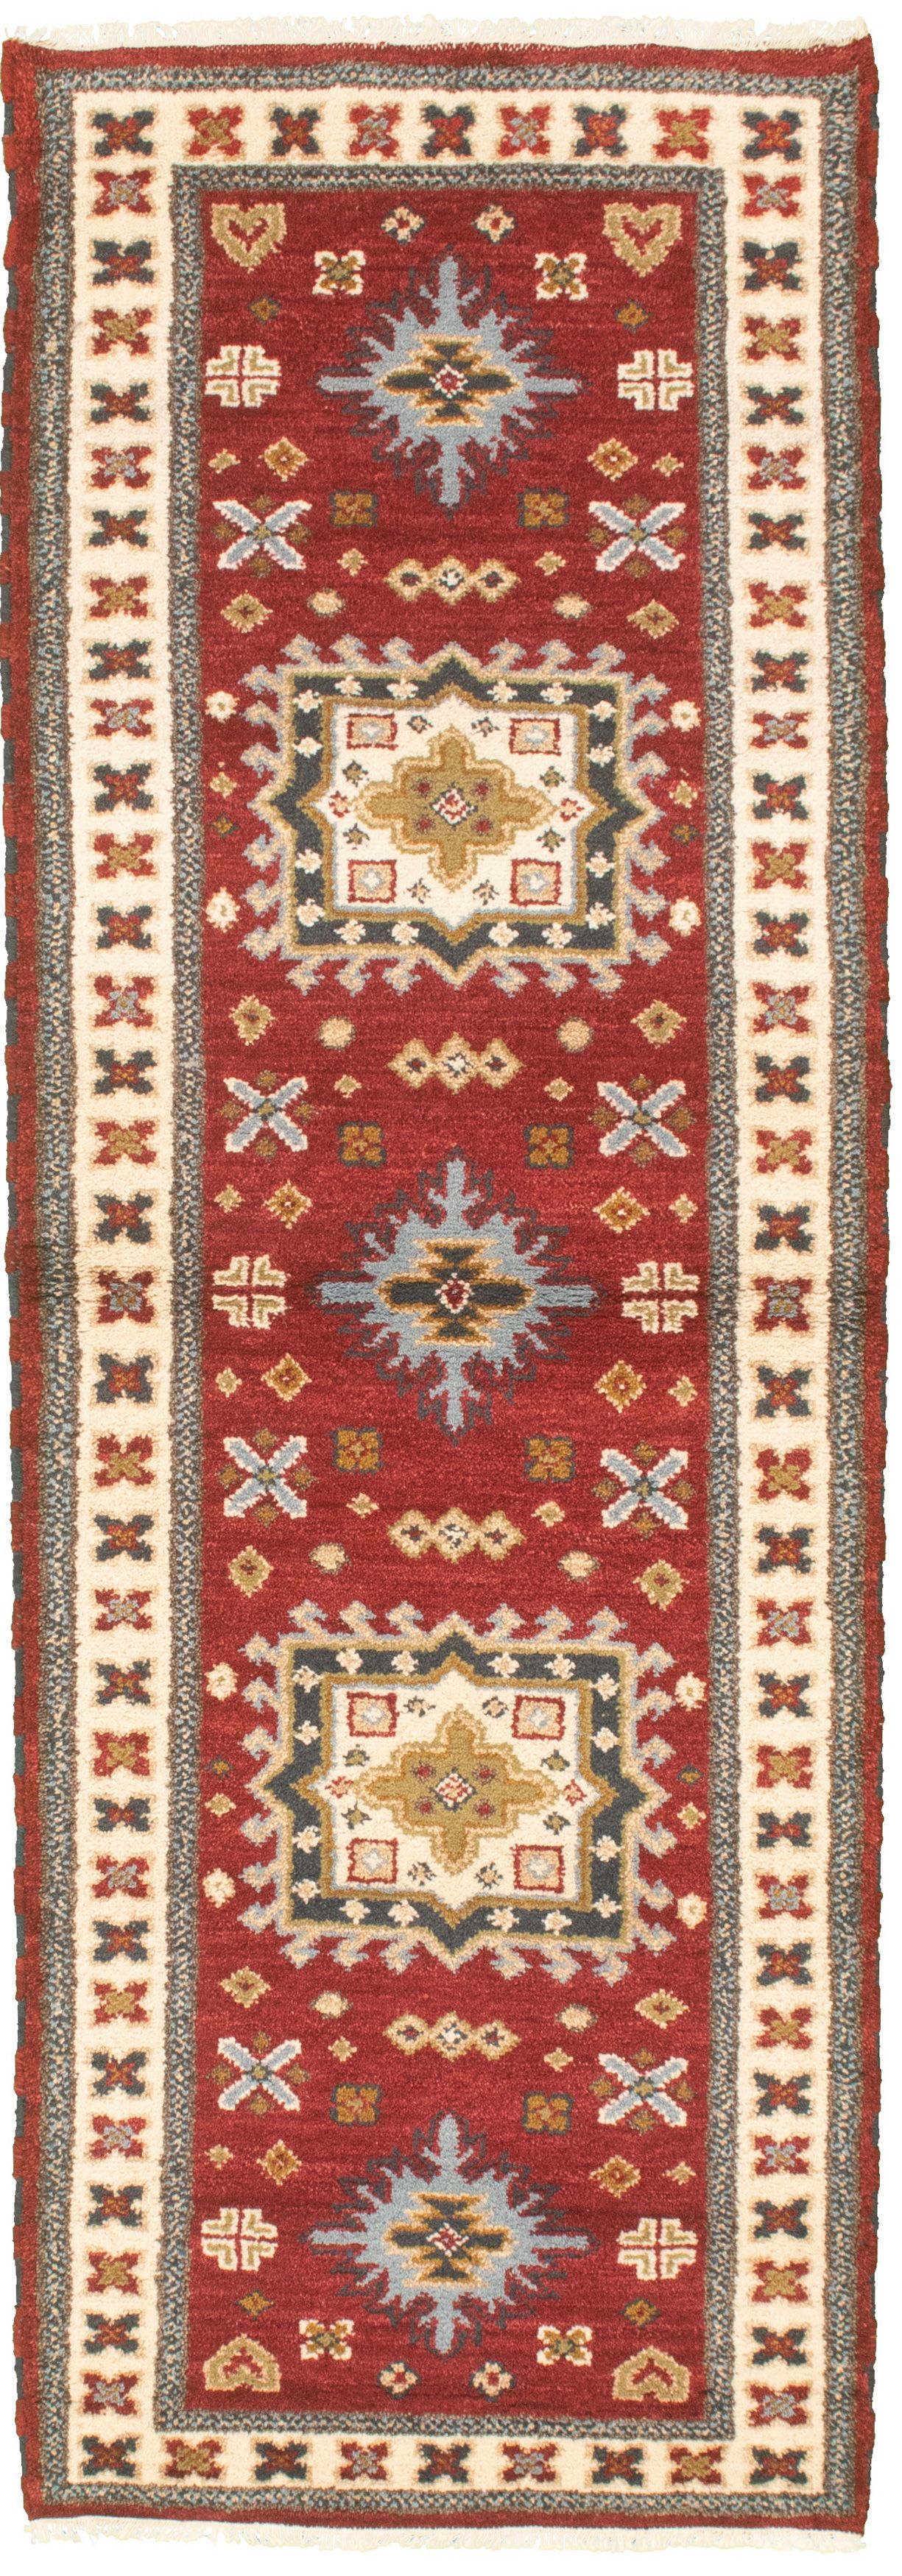 Hand-knotted Royal Kazak Dark Red Wool Rug 2'9" x 8'4"  Size: 2'9" x 8'4"  